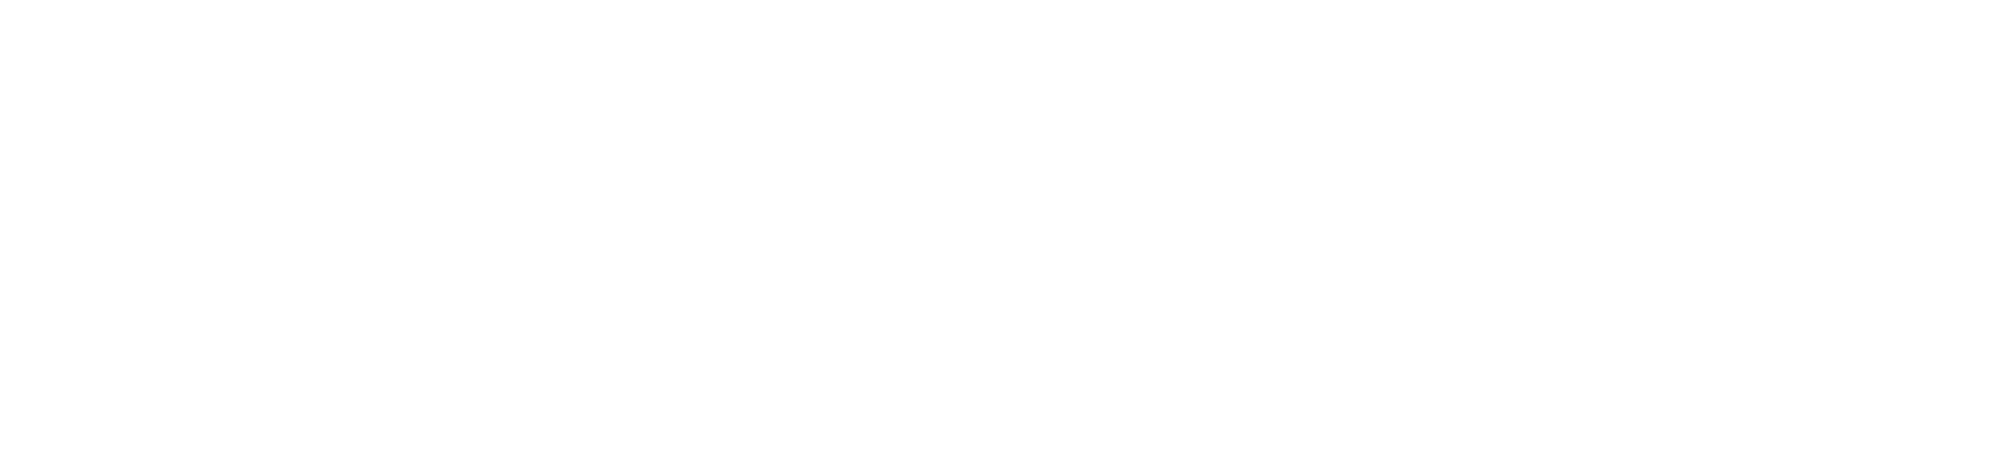 Blood Bank of Alaska - Helping Alaska patients in need